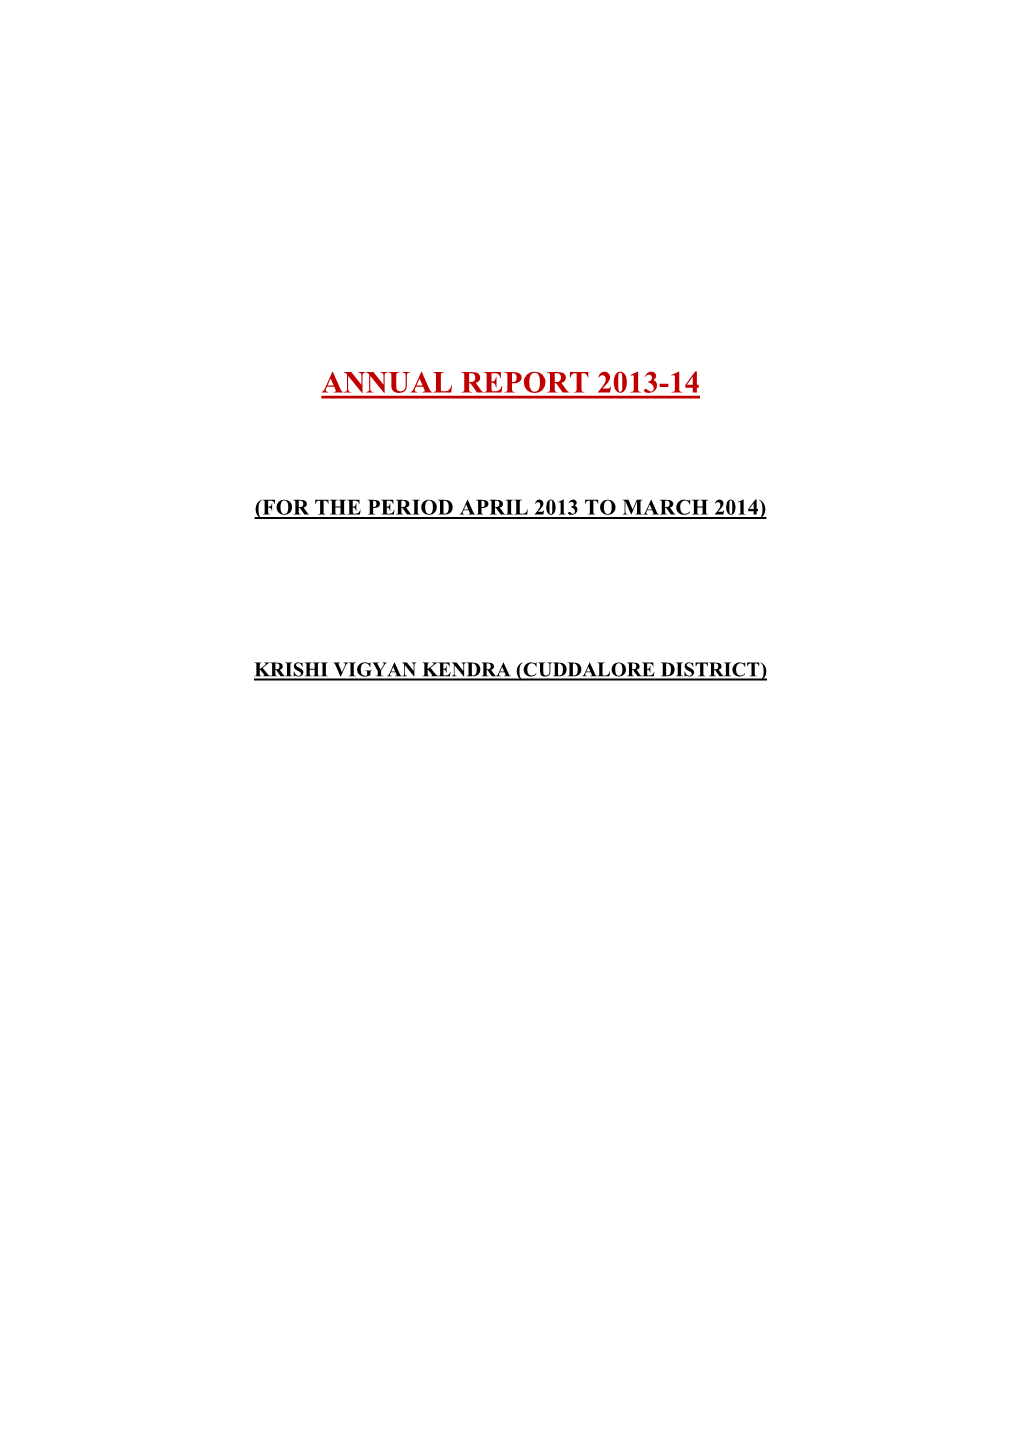 KVK Cuddalore-Annual Report 2013-14